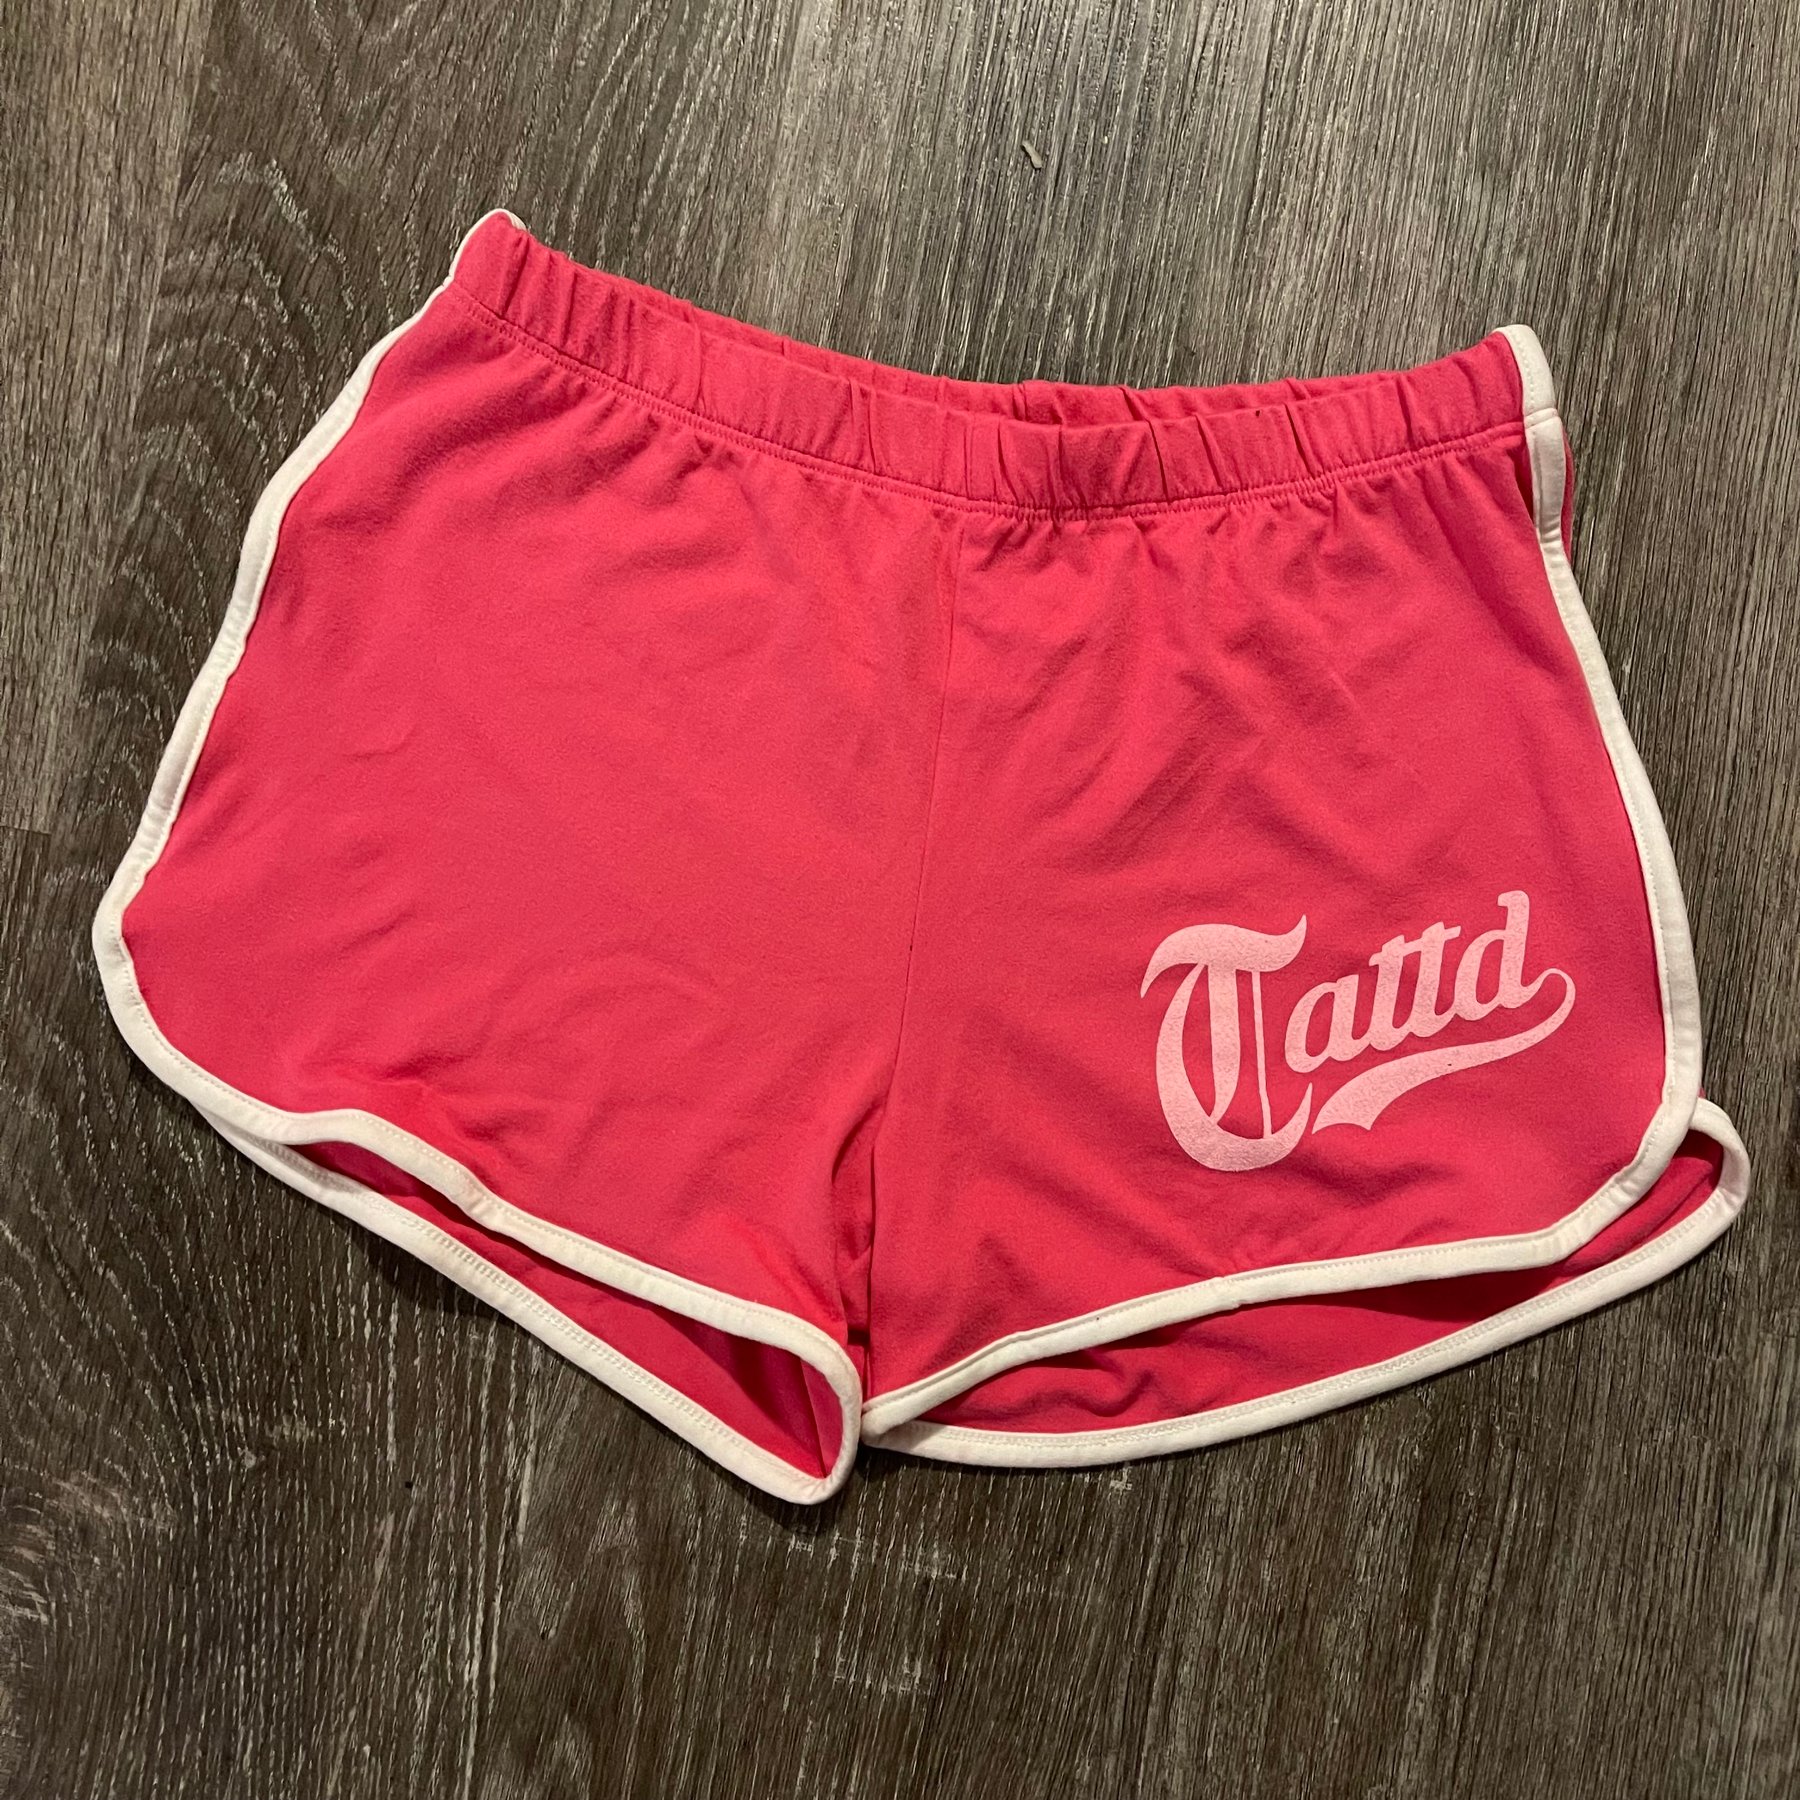 Hot pink dolphin shorts | TATTD CLOTHING